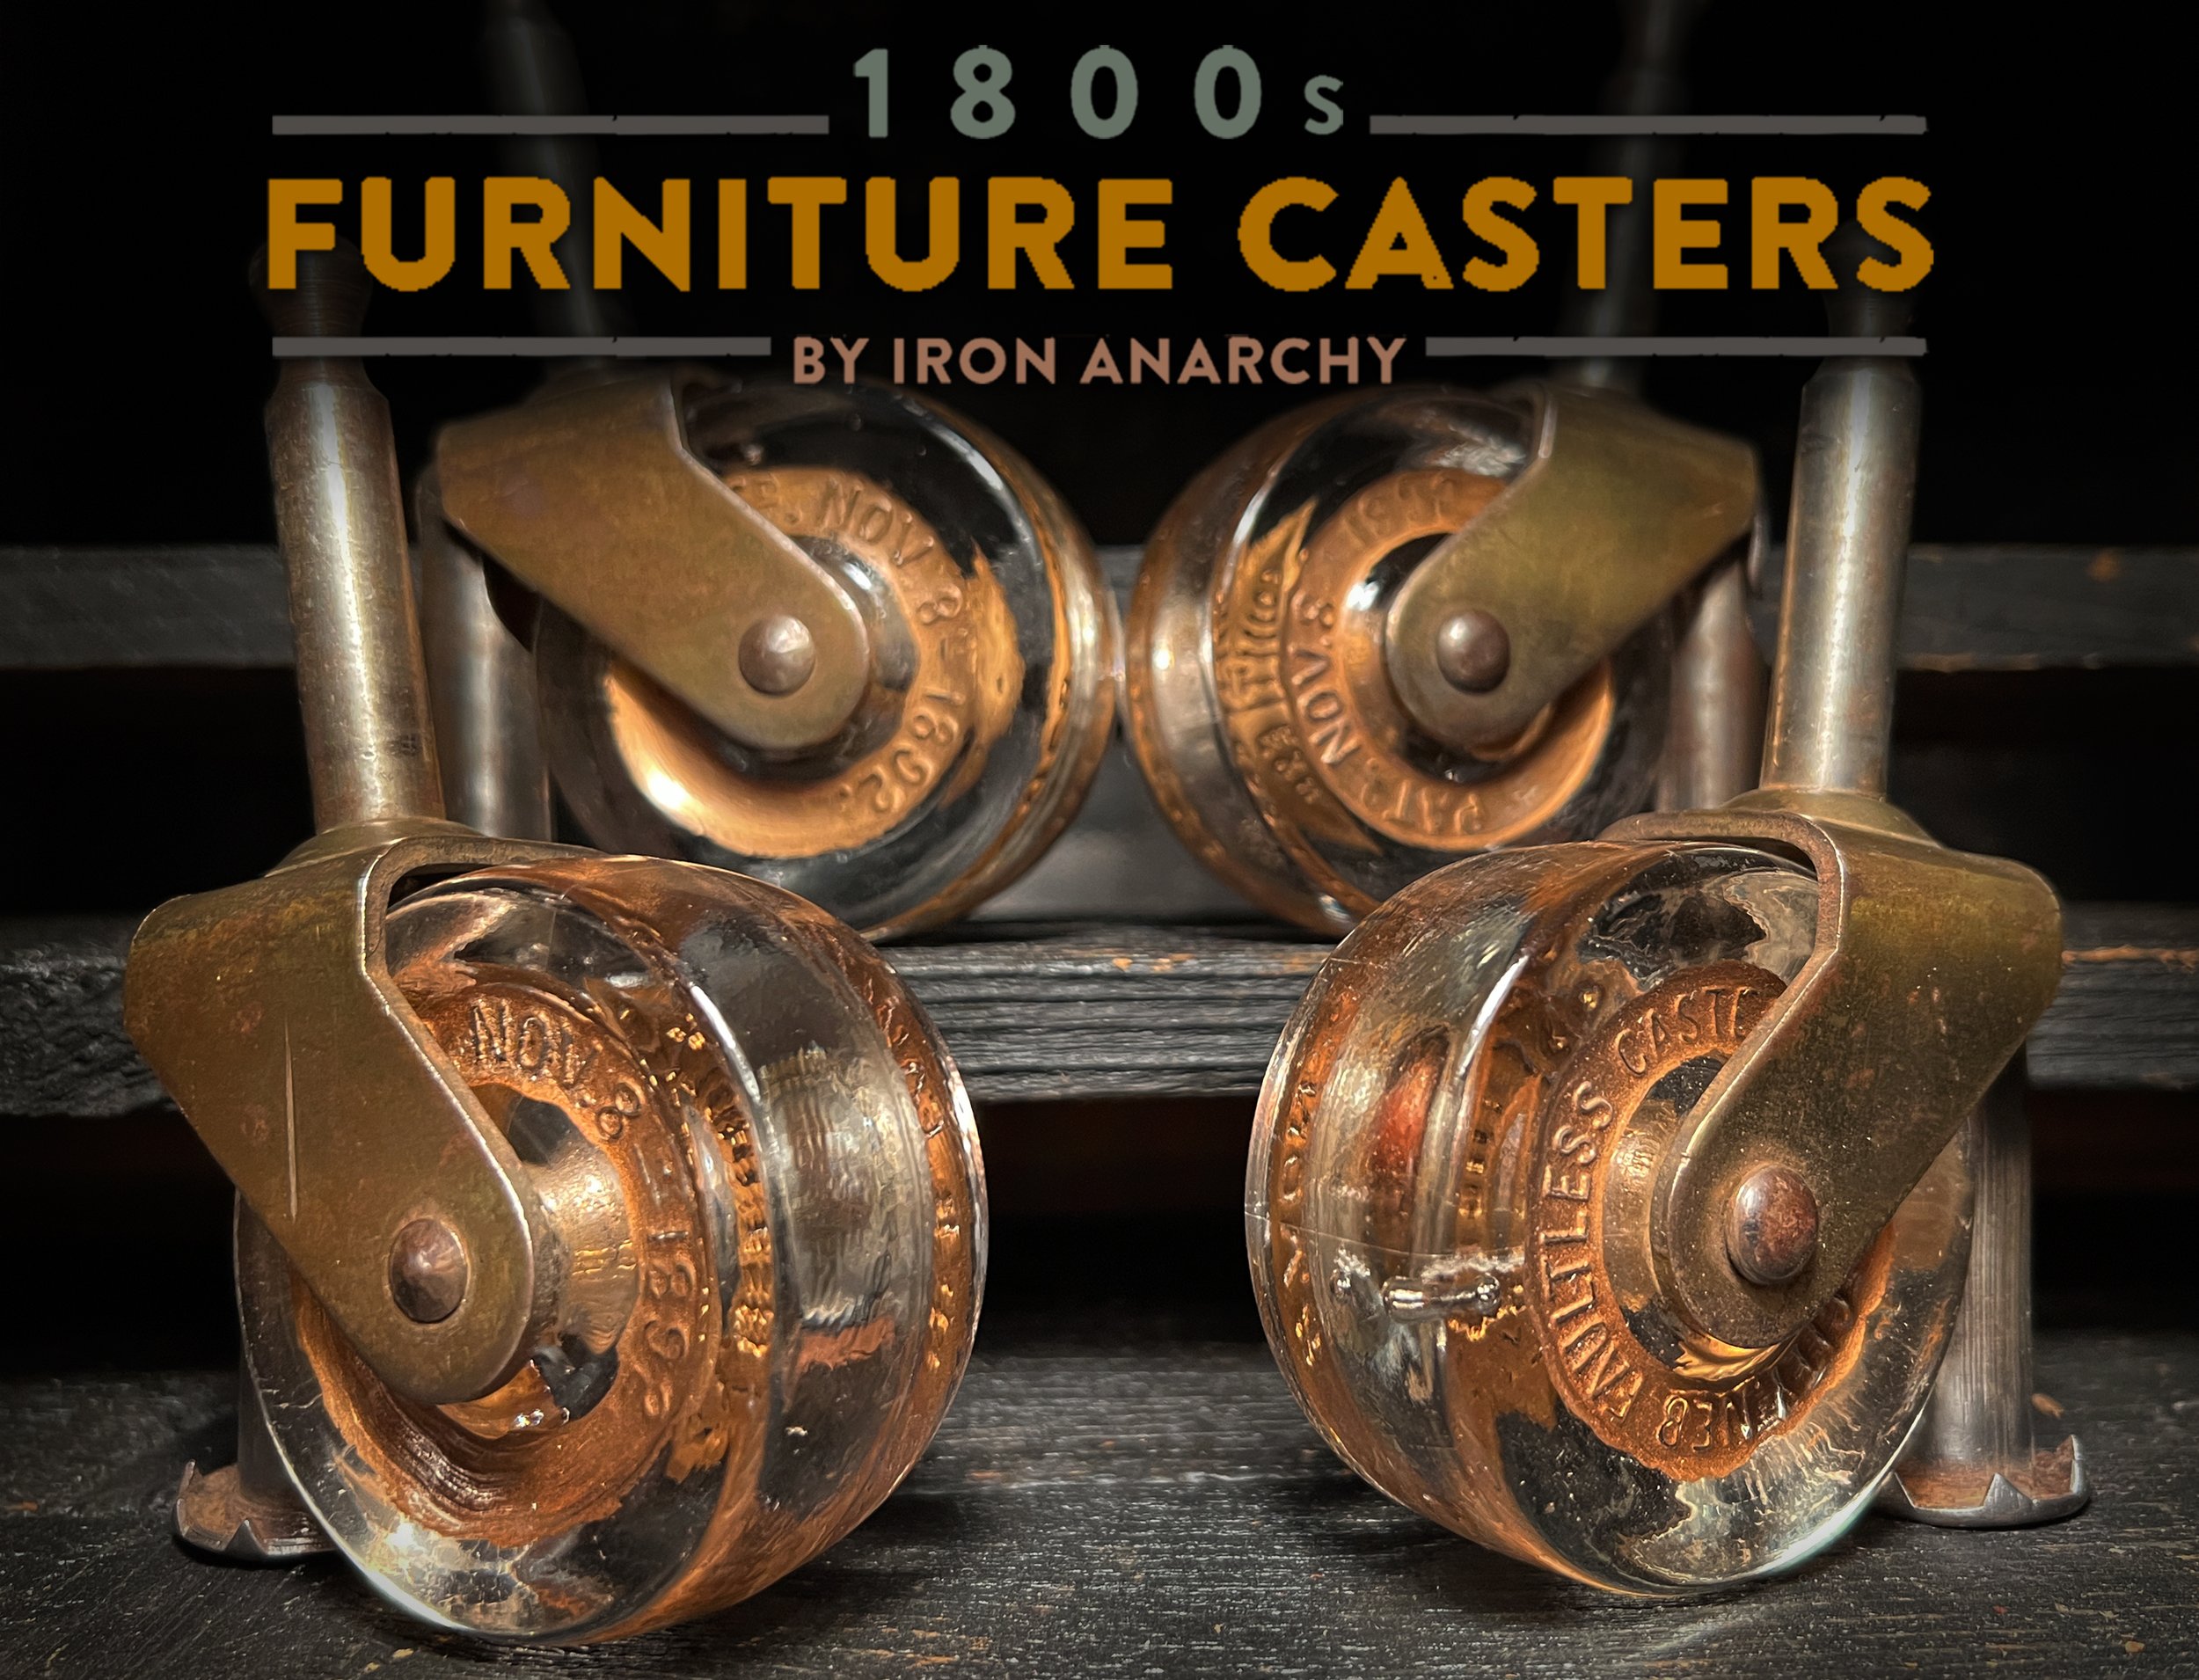 Antique Furniture Casters, Vintage Furniture Casters